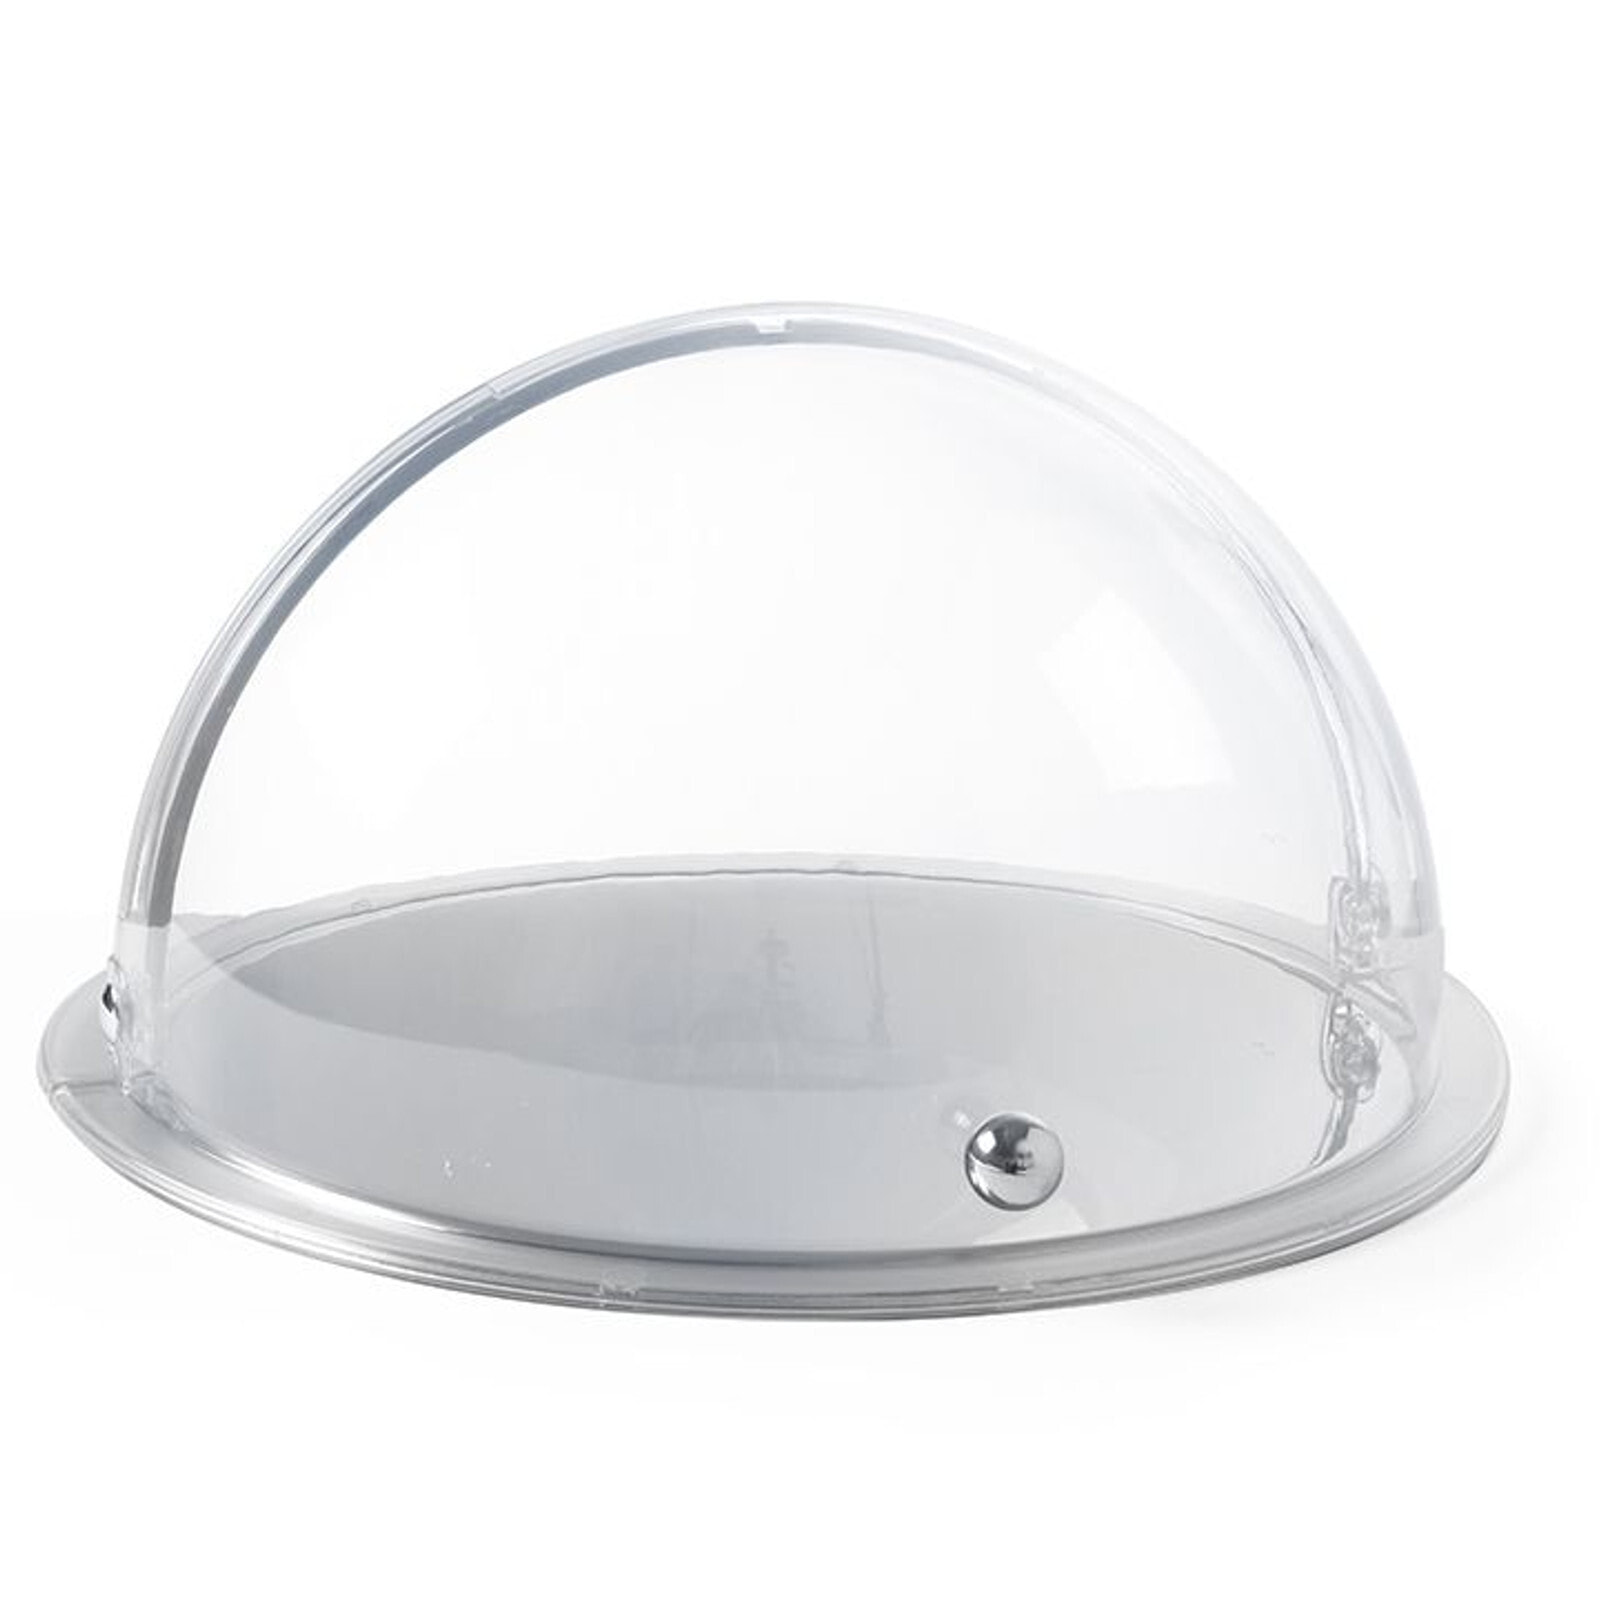 Round RollTop lid for food display - Hendi 427514